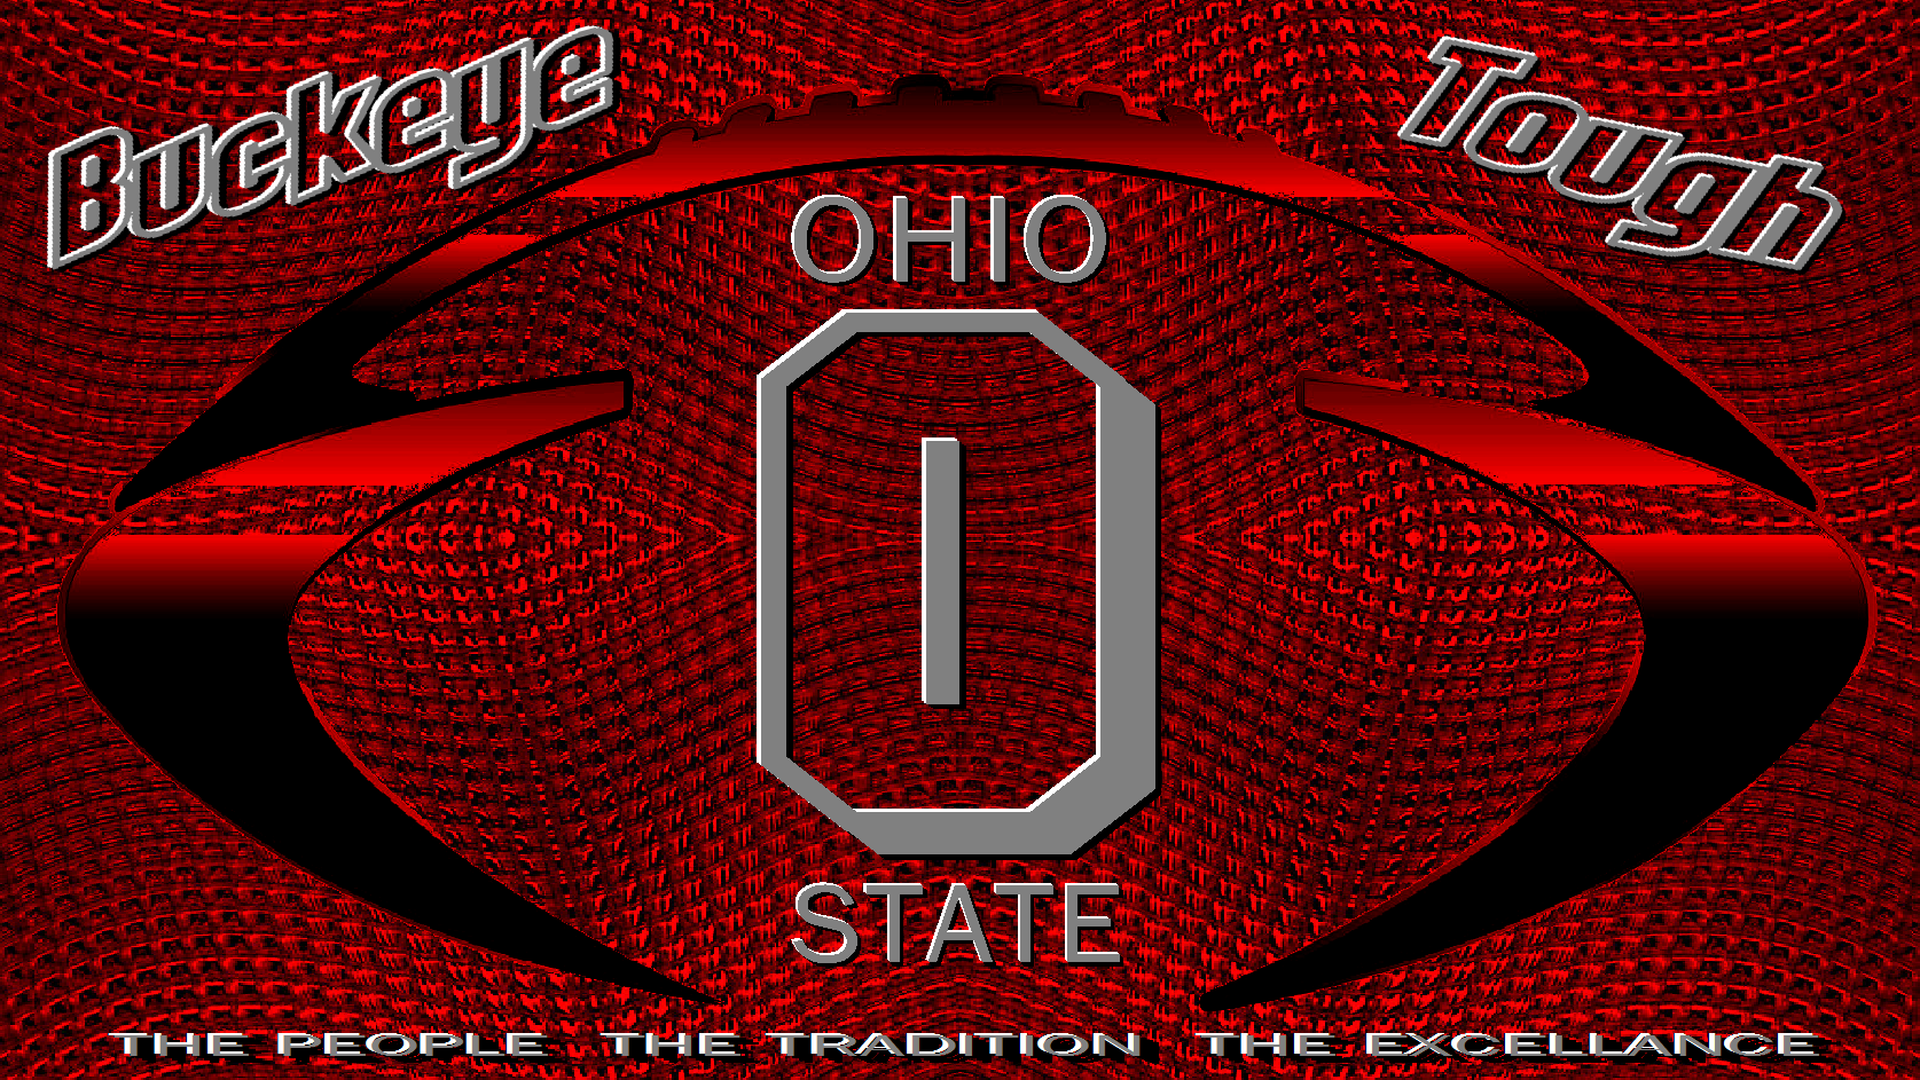 Buckeye Tough Ohio State Football Wallpaper